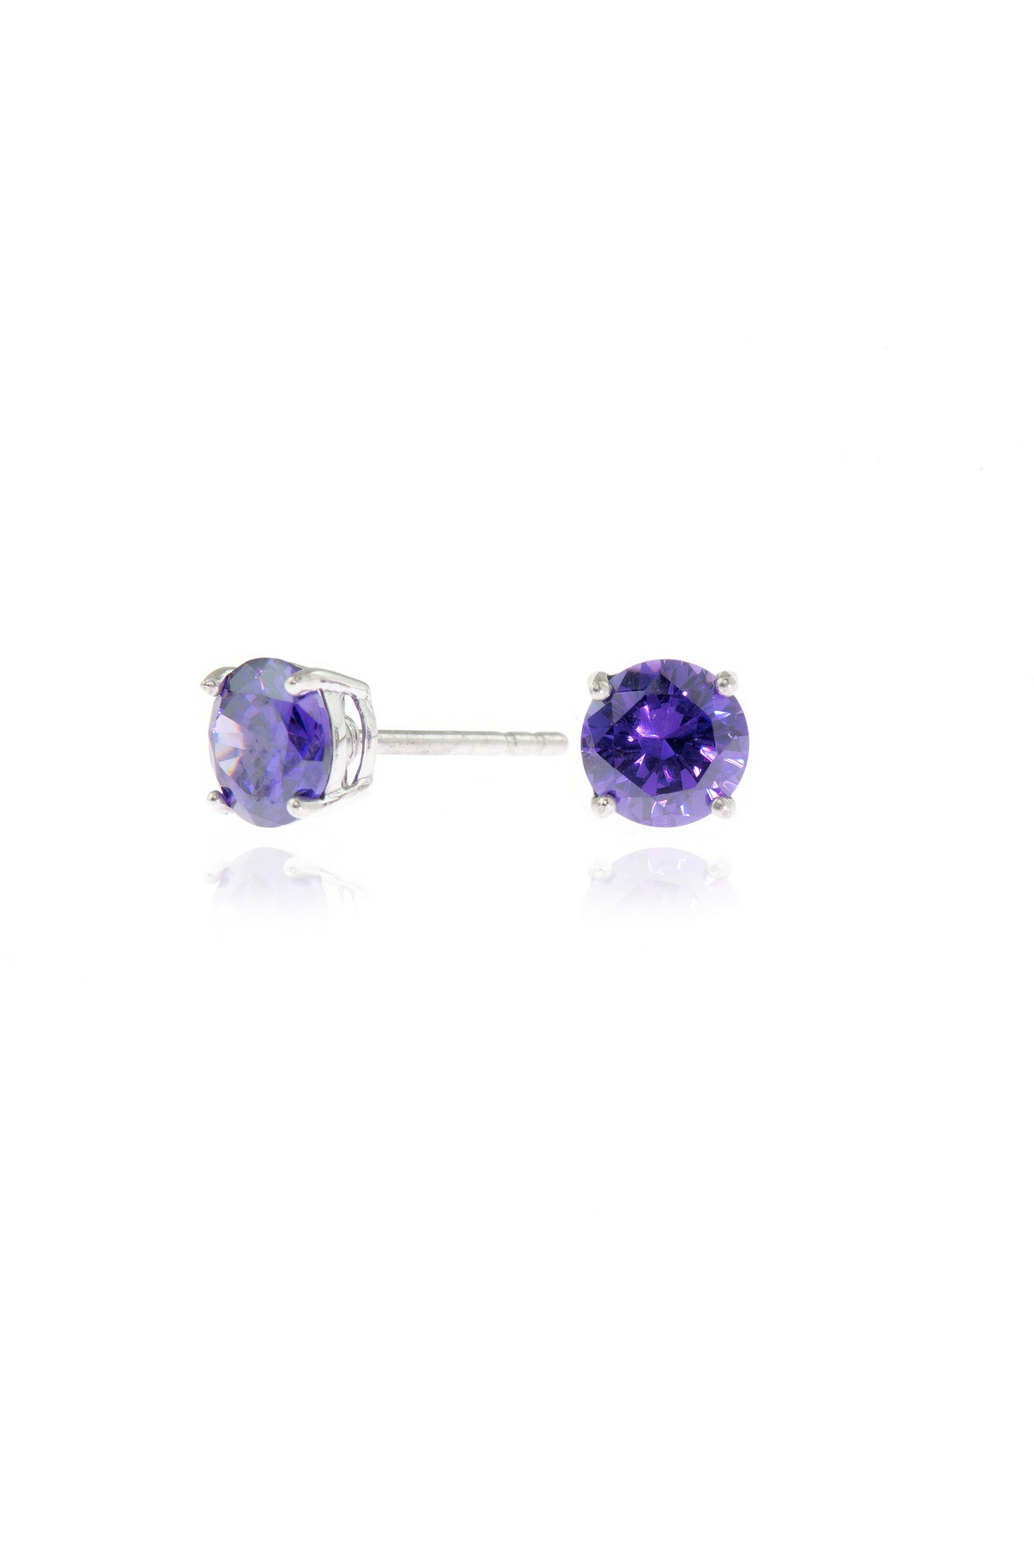 Lana 6mm Earrings Violet Cz Platinum Plated 480422R280